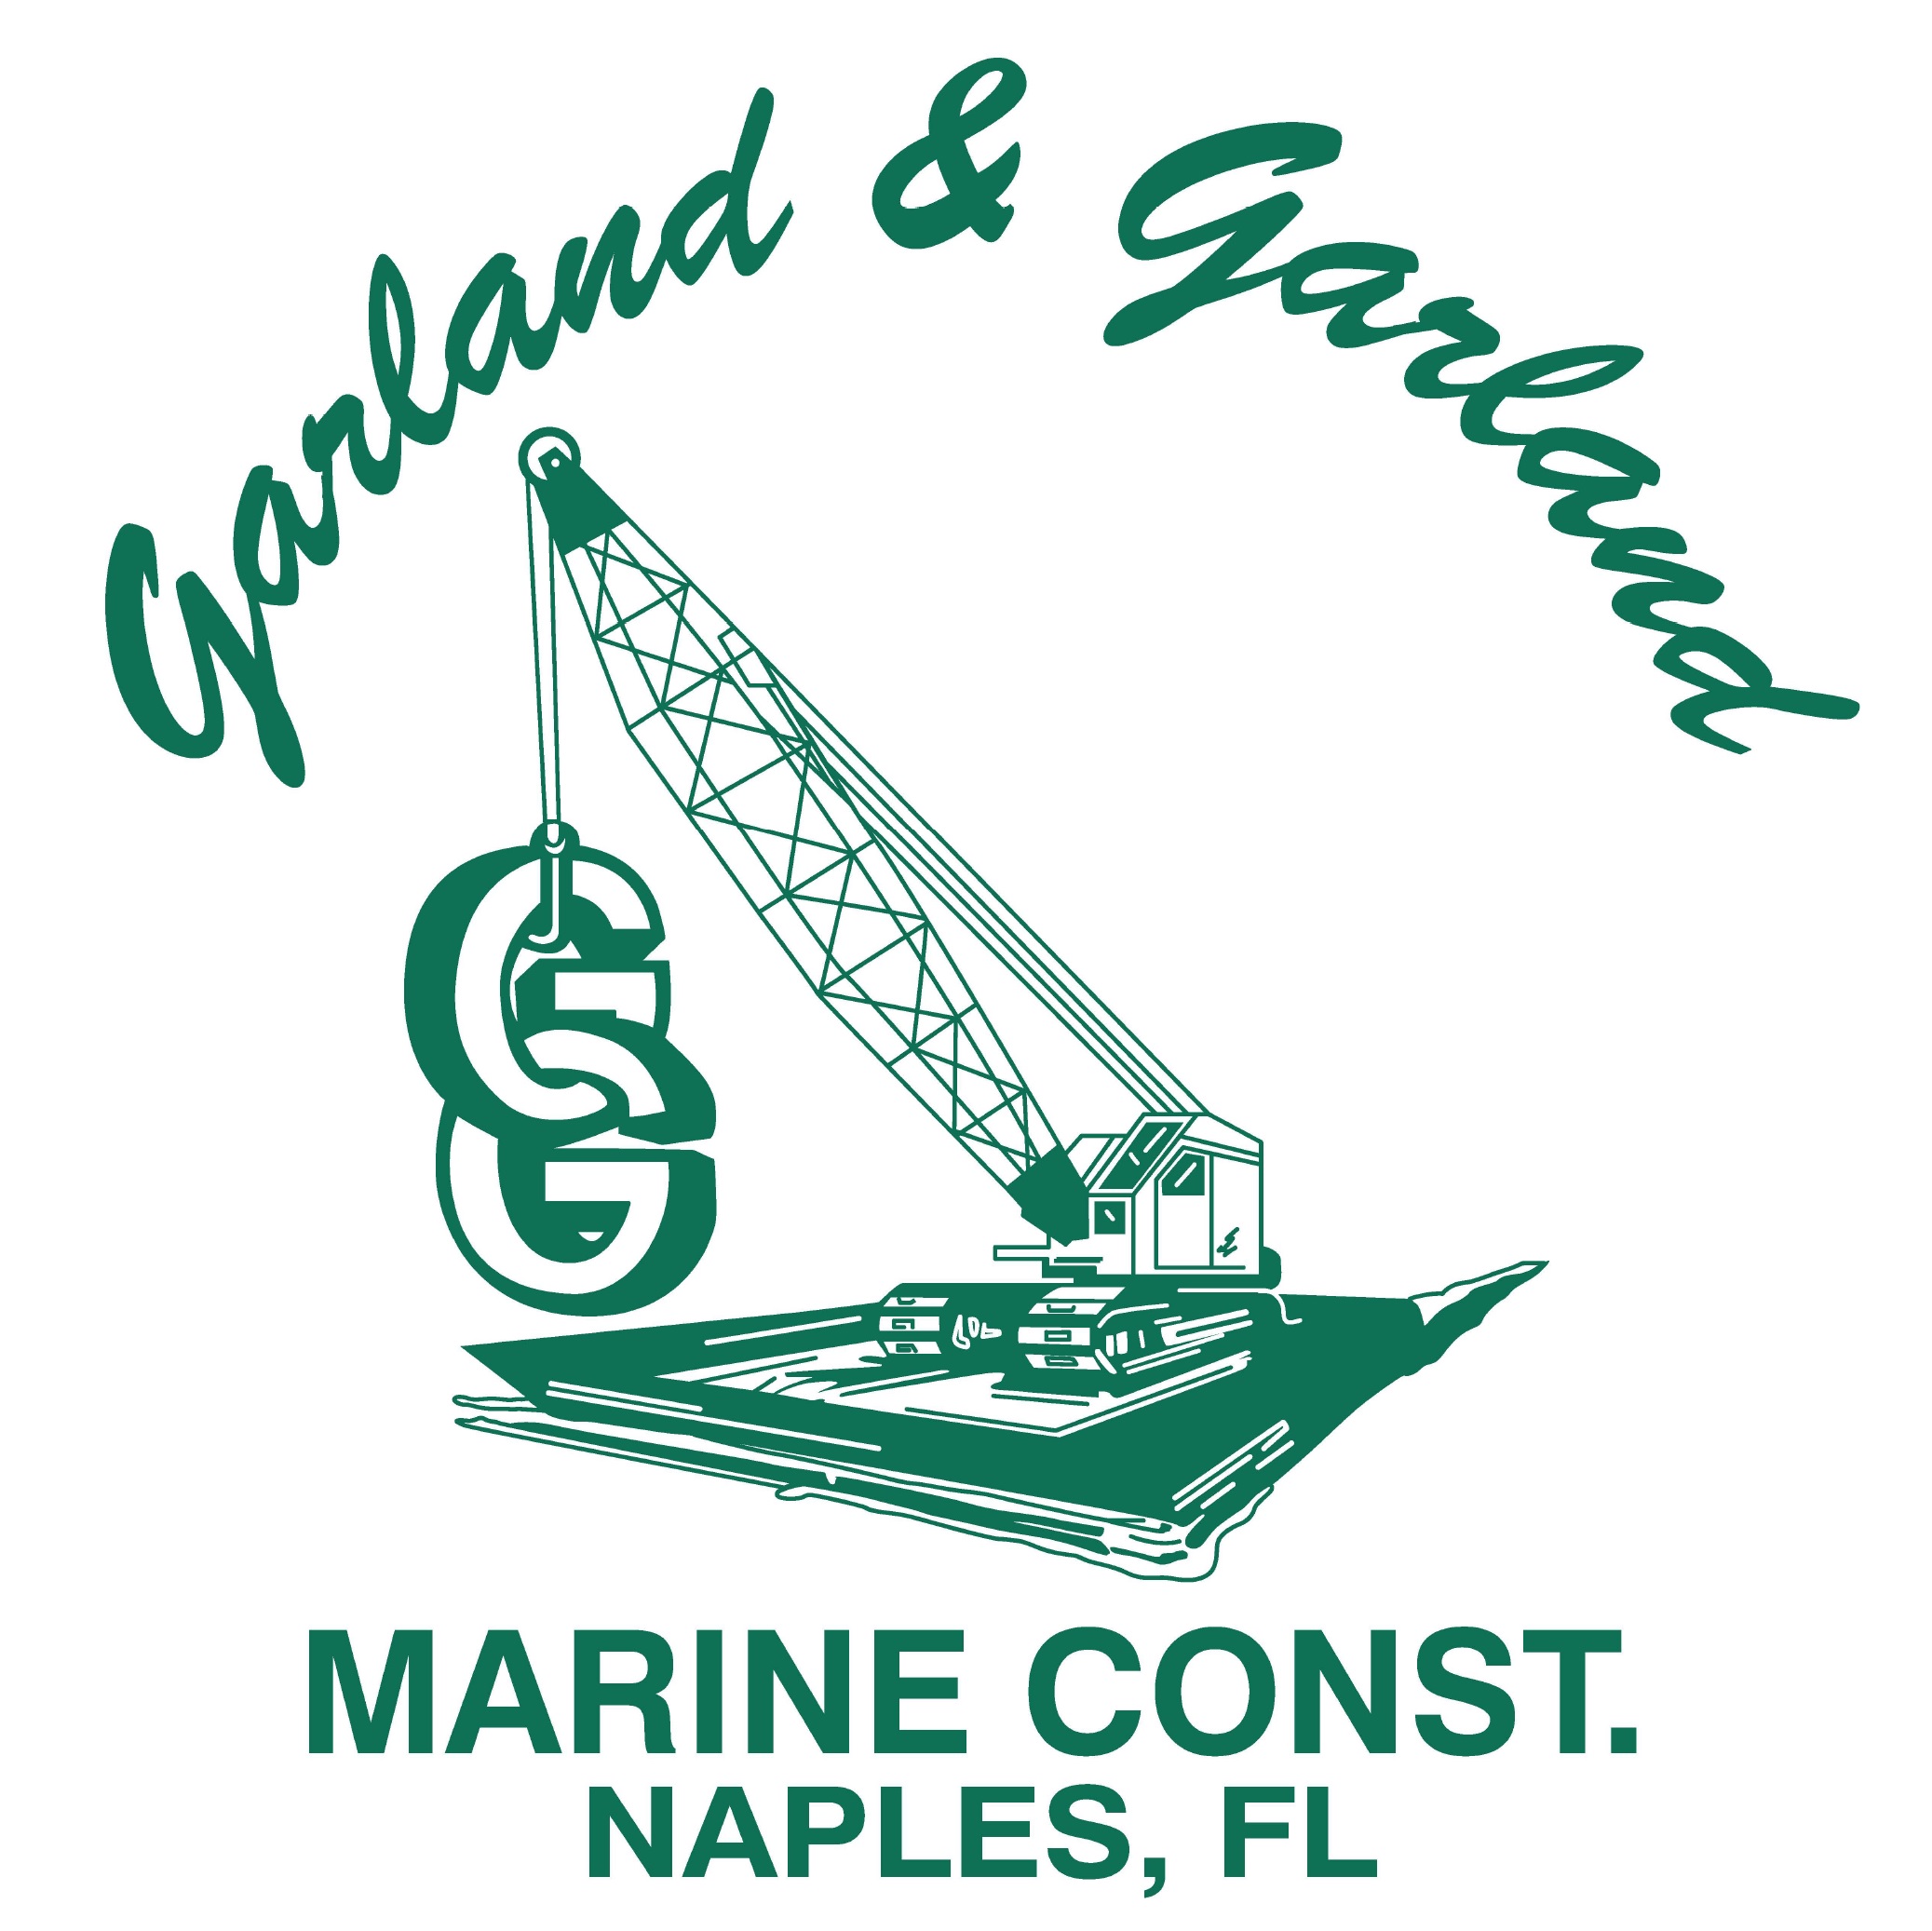 Garland & Garland Marine Construction Logo